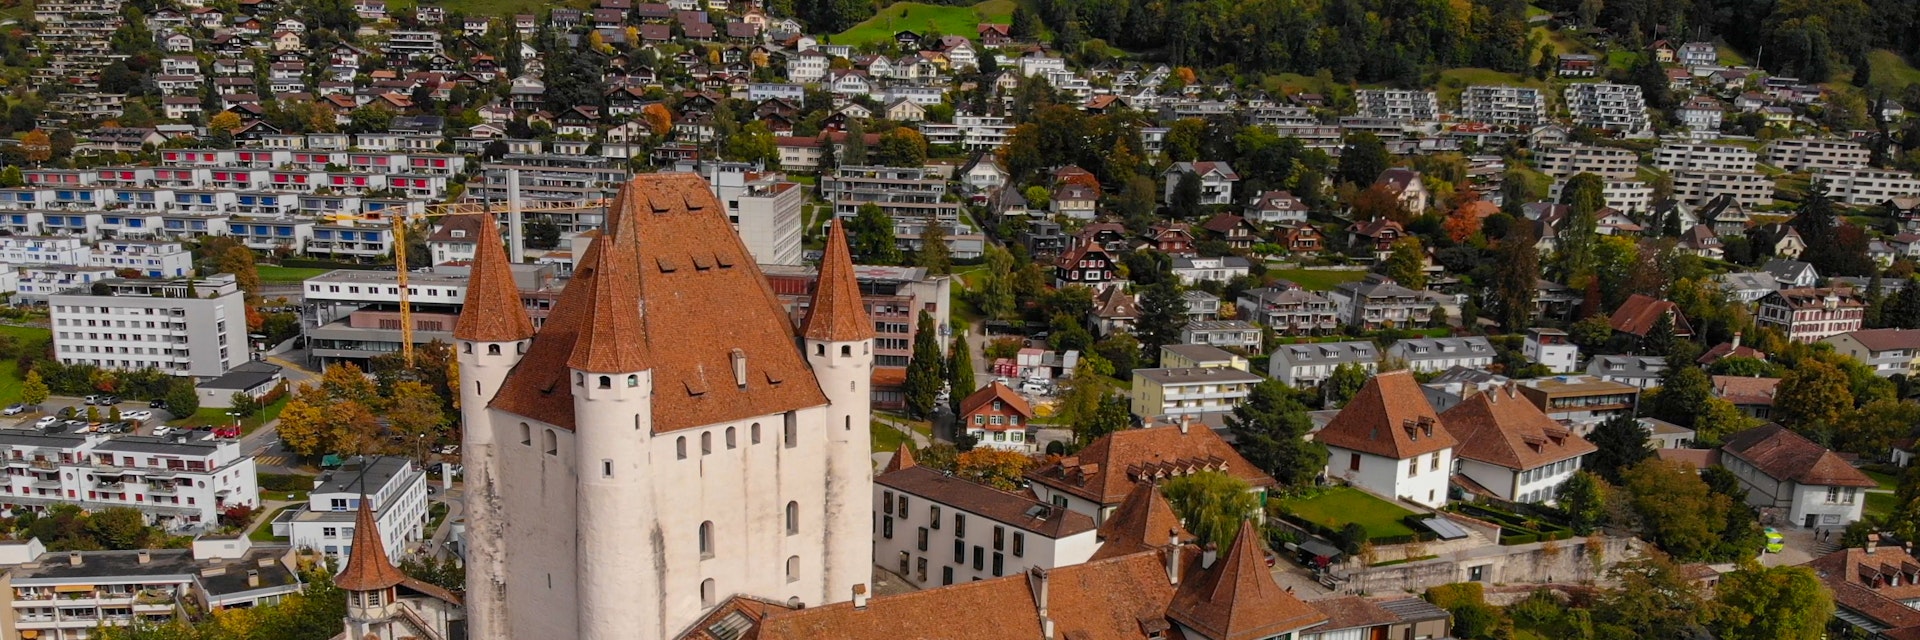 Thun Castle in Switzerland.